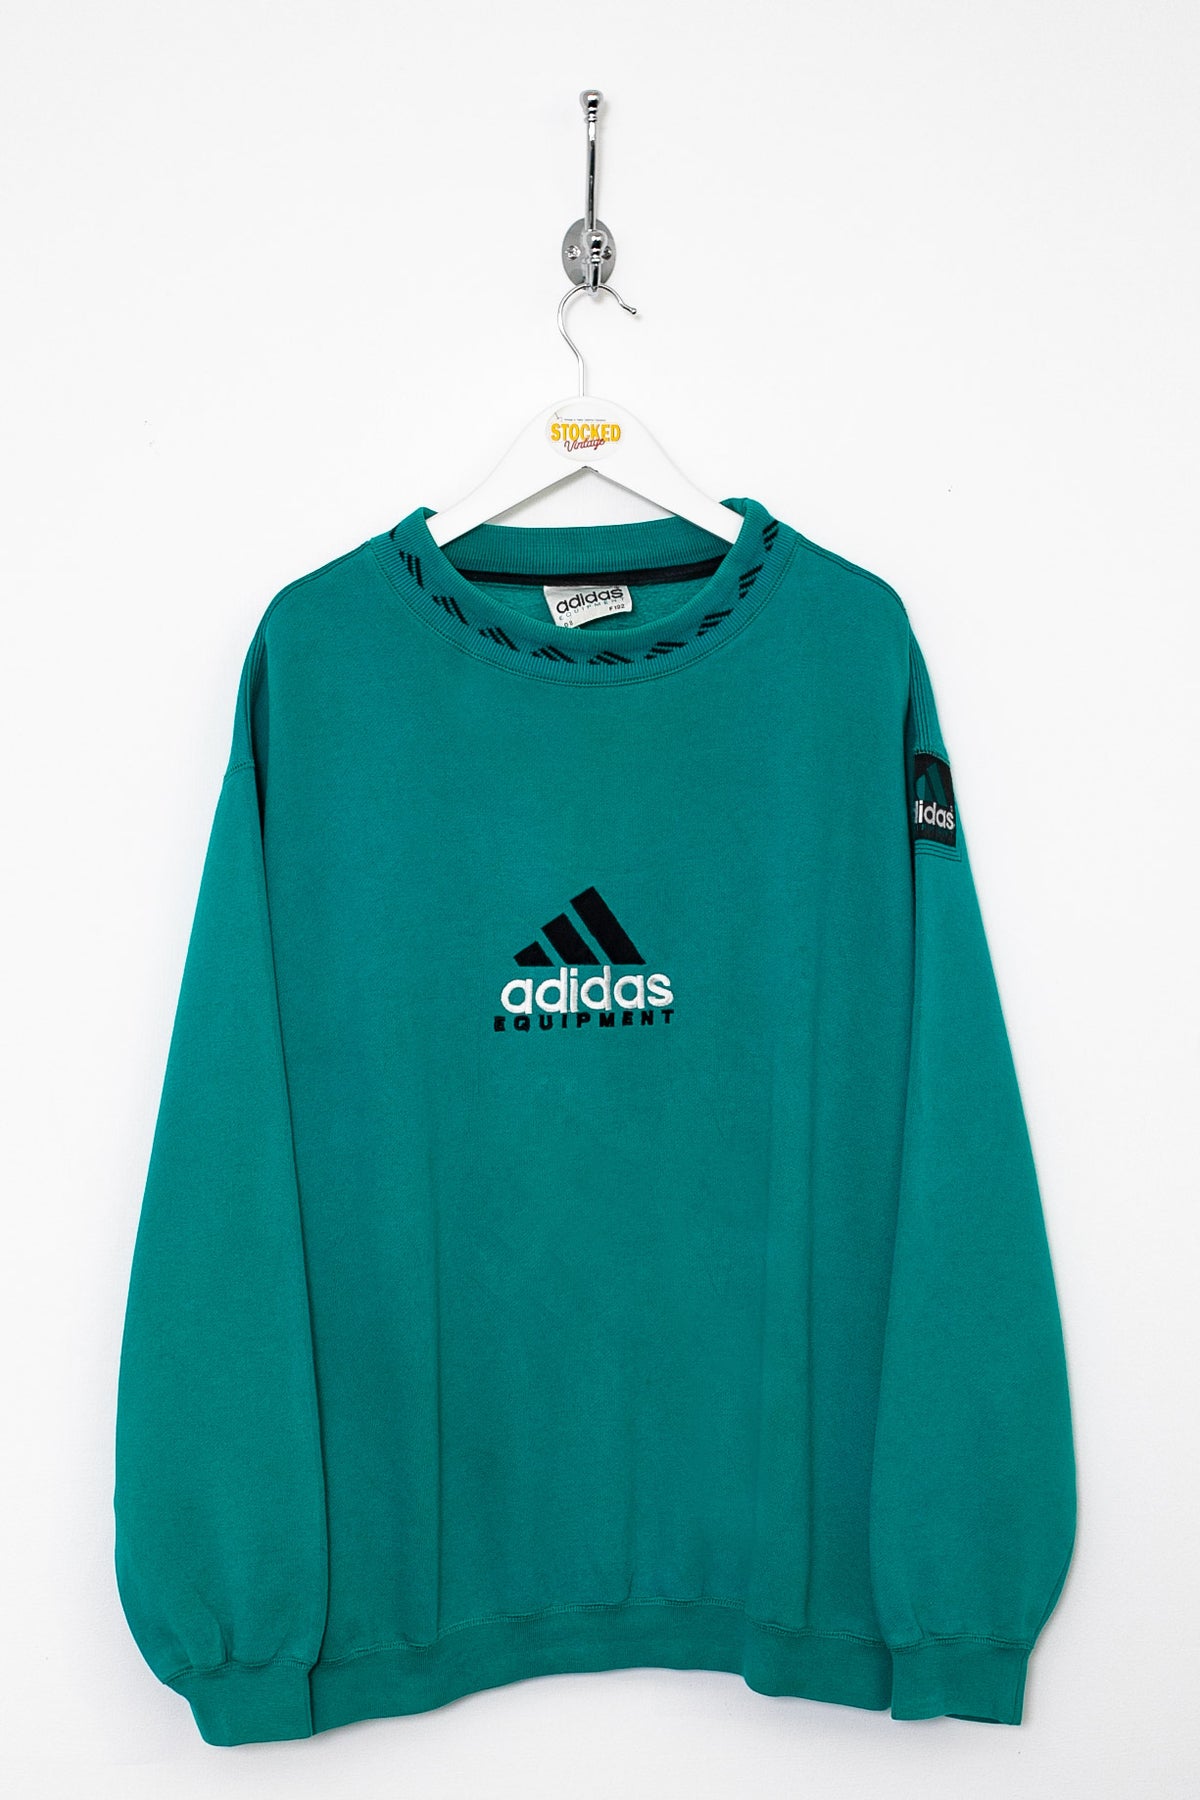 90s Adidas Equipment Sweatshirt (L)